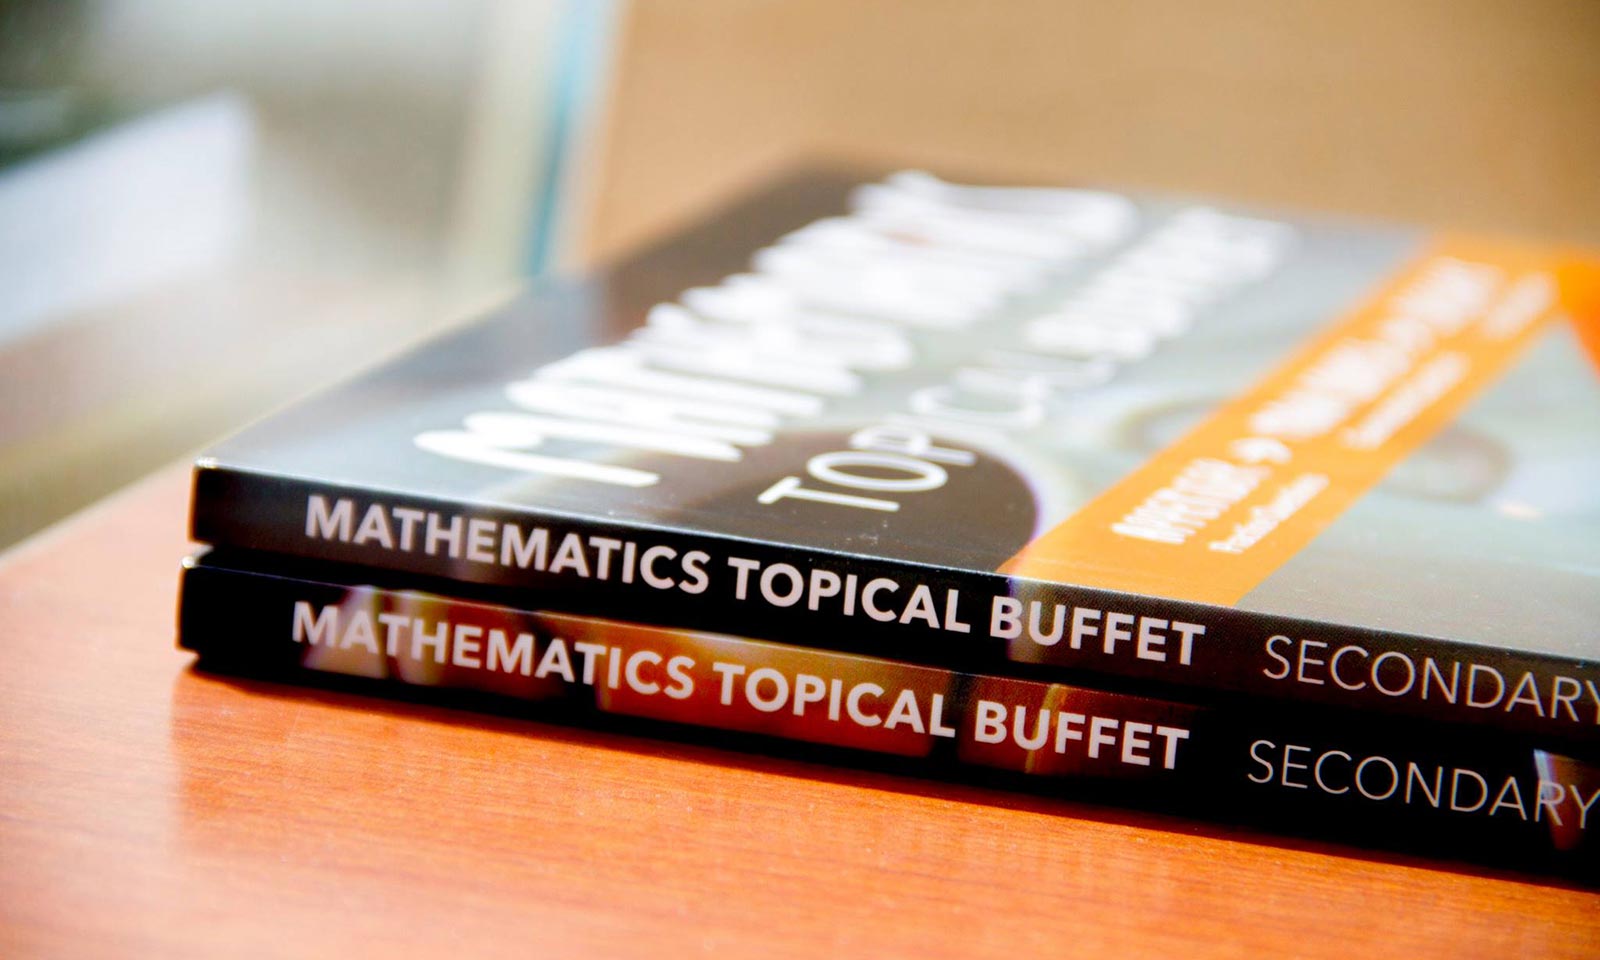 Singapore Mathematics Books by homework.sg